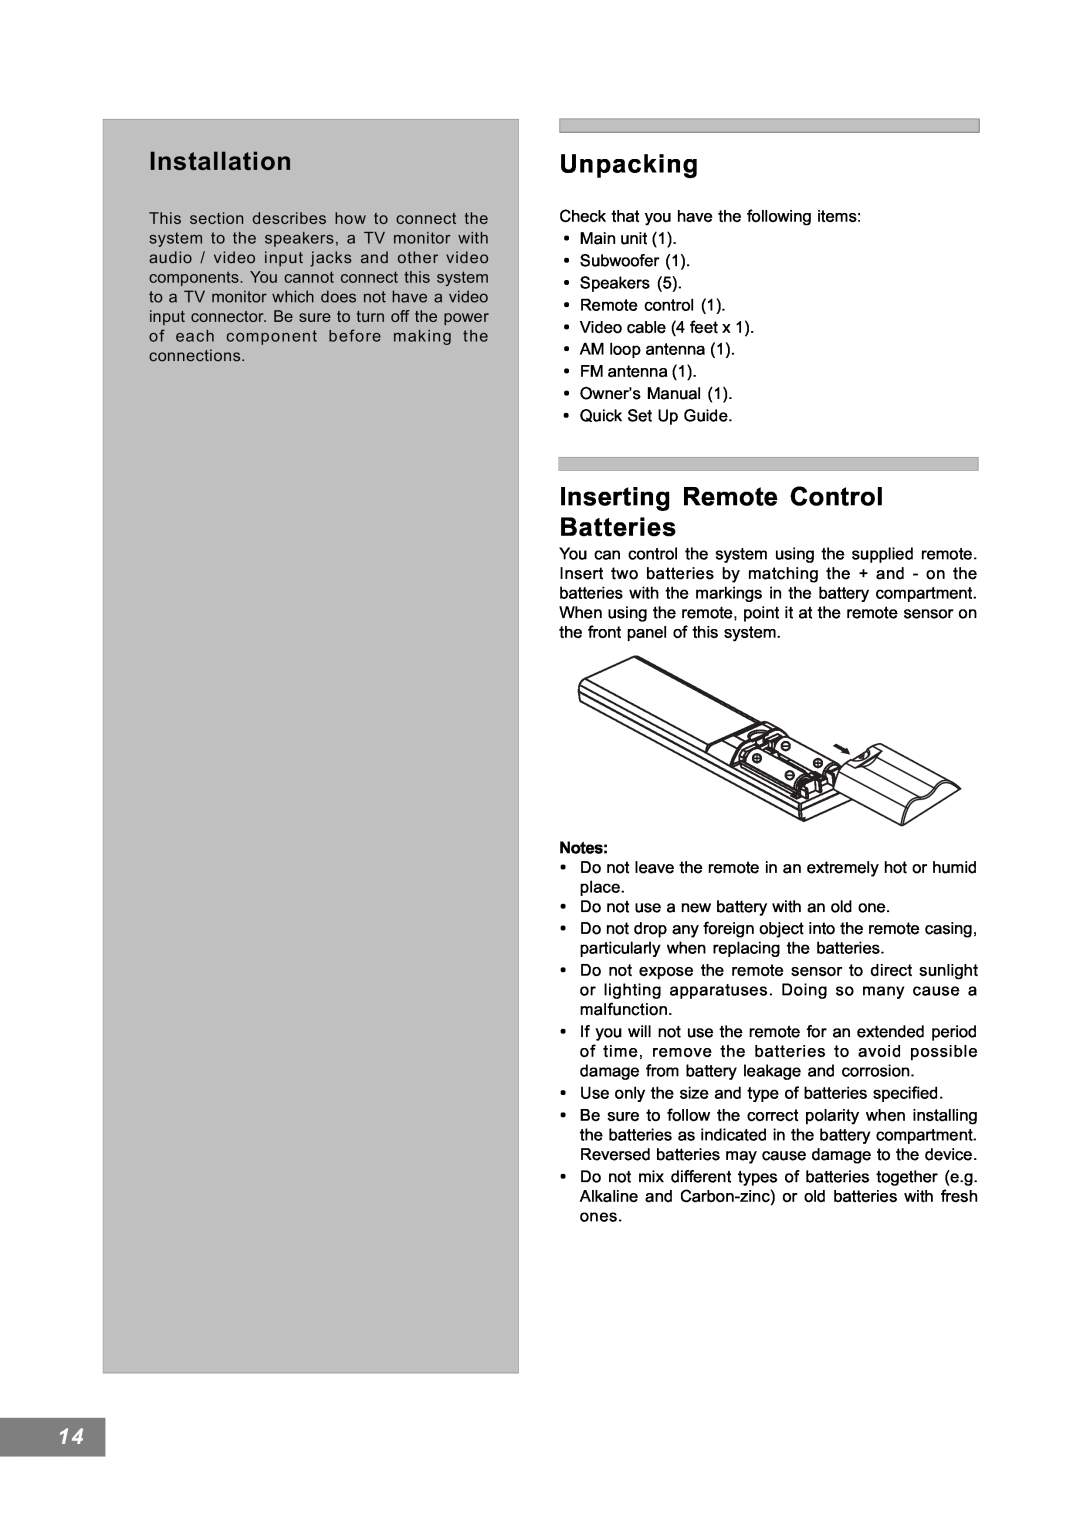 Emerson AV101 manual Installation, Unpacking, Inserting Remote Control Batteries 